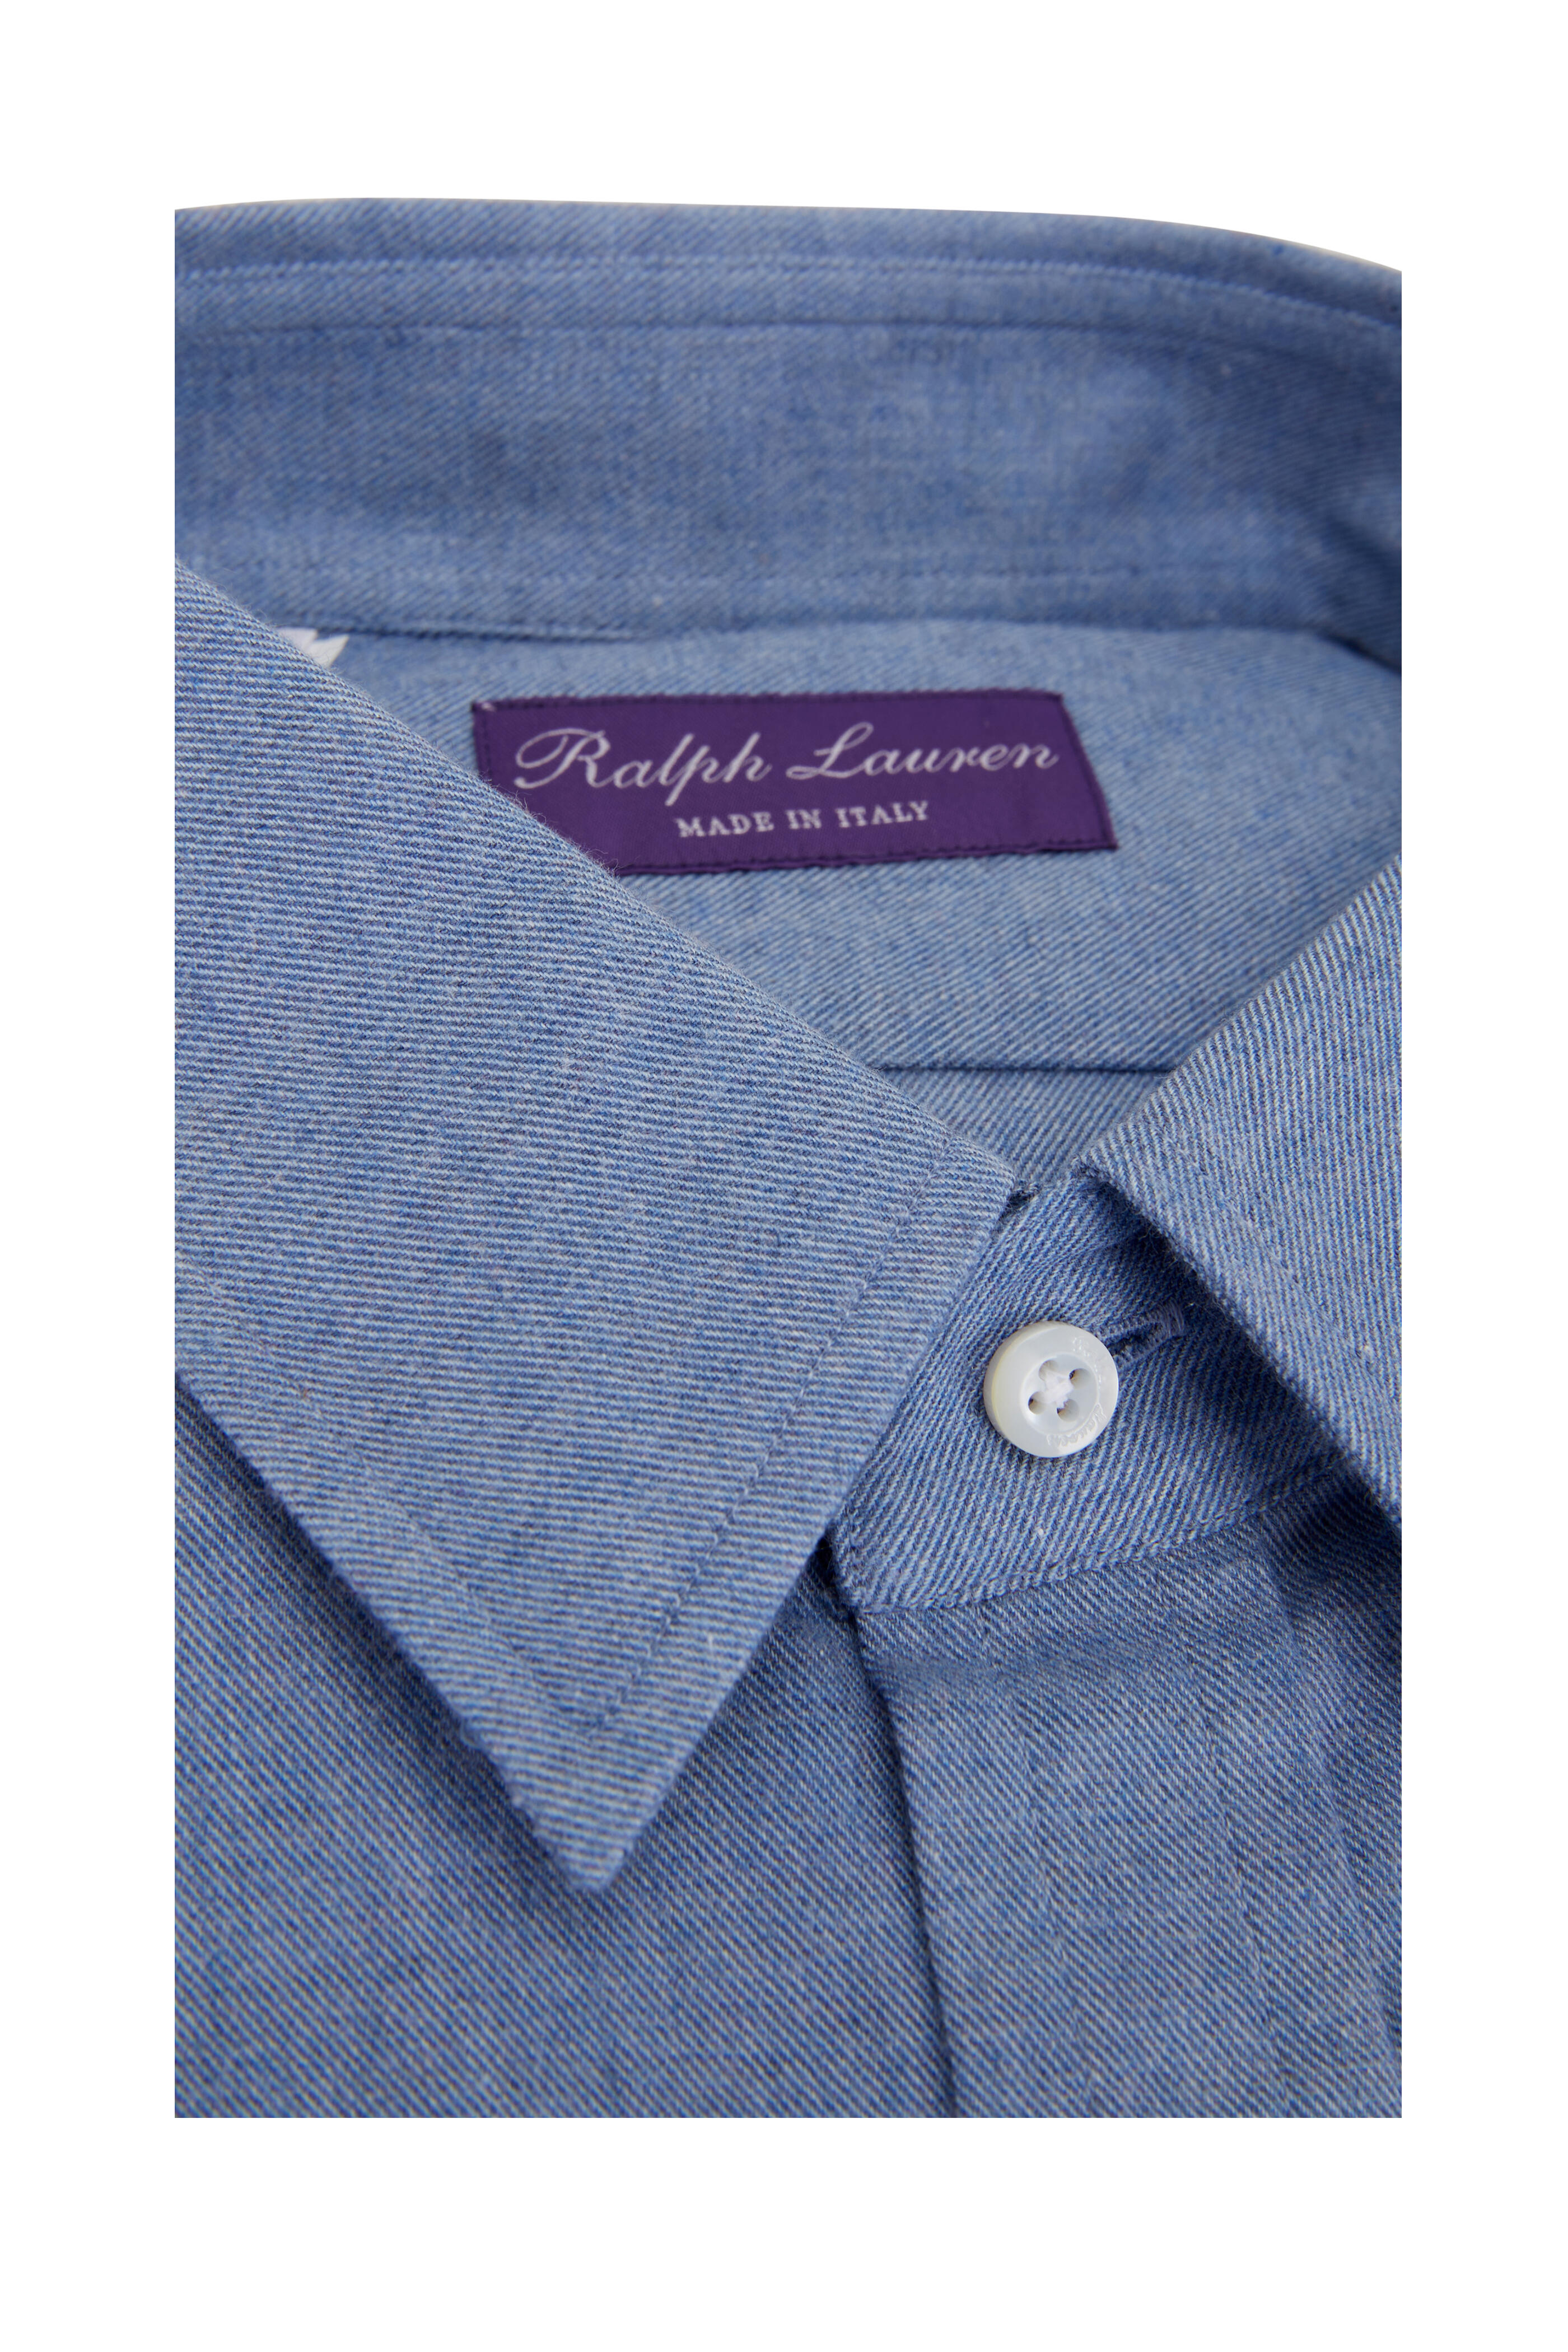 Ralph Lauren Purple Label - Blue Melange Twill Sport Shirt